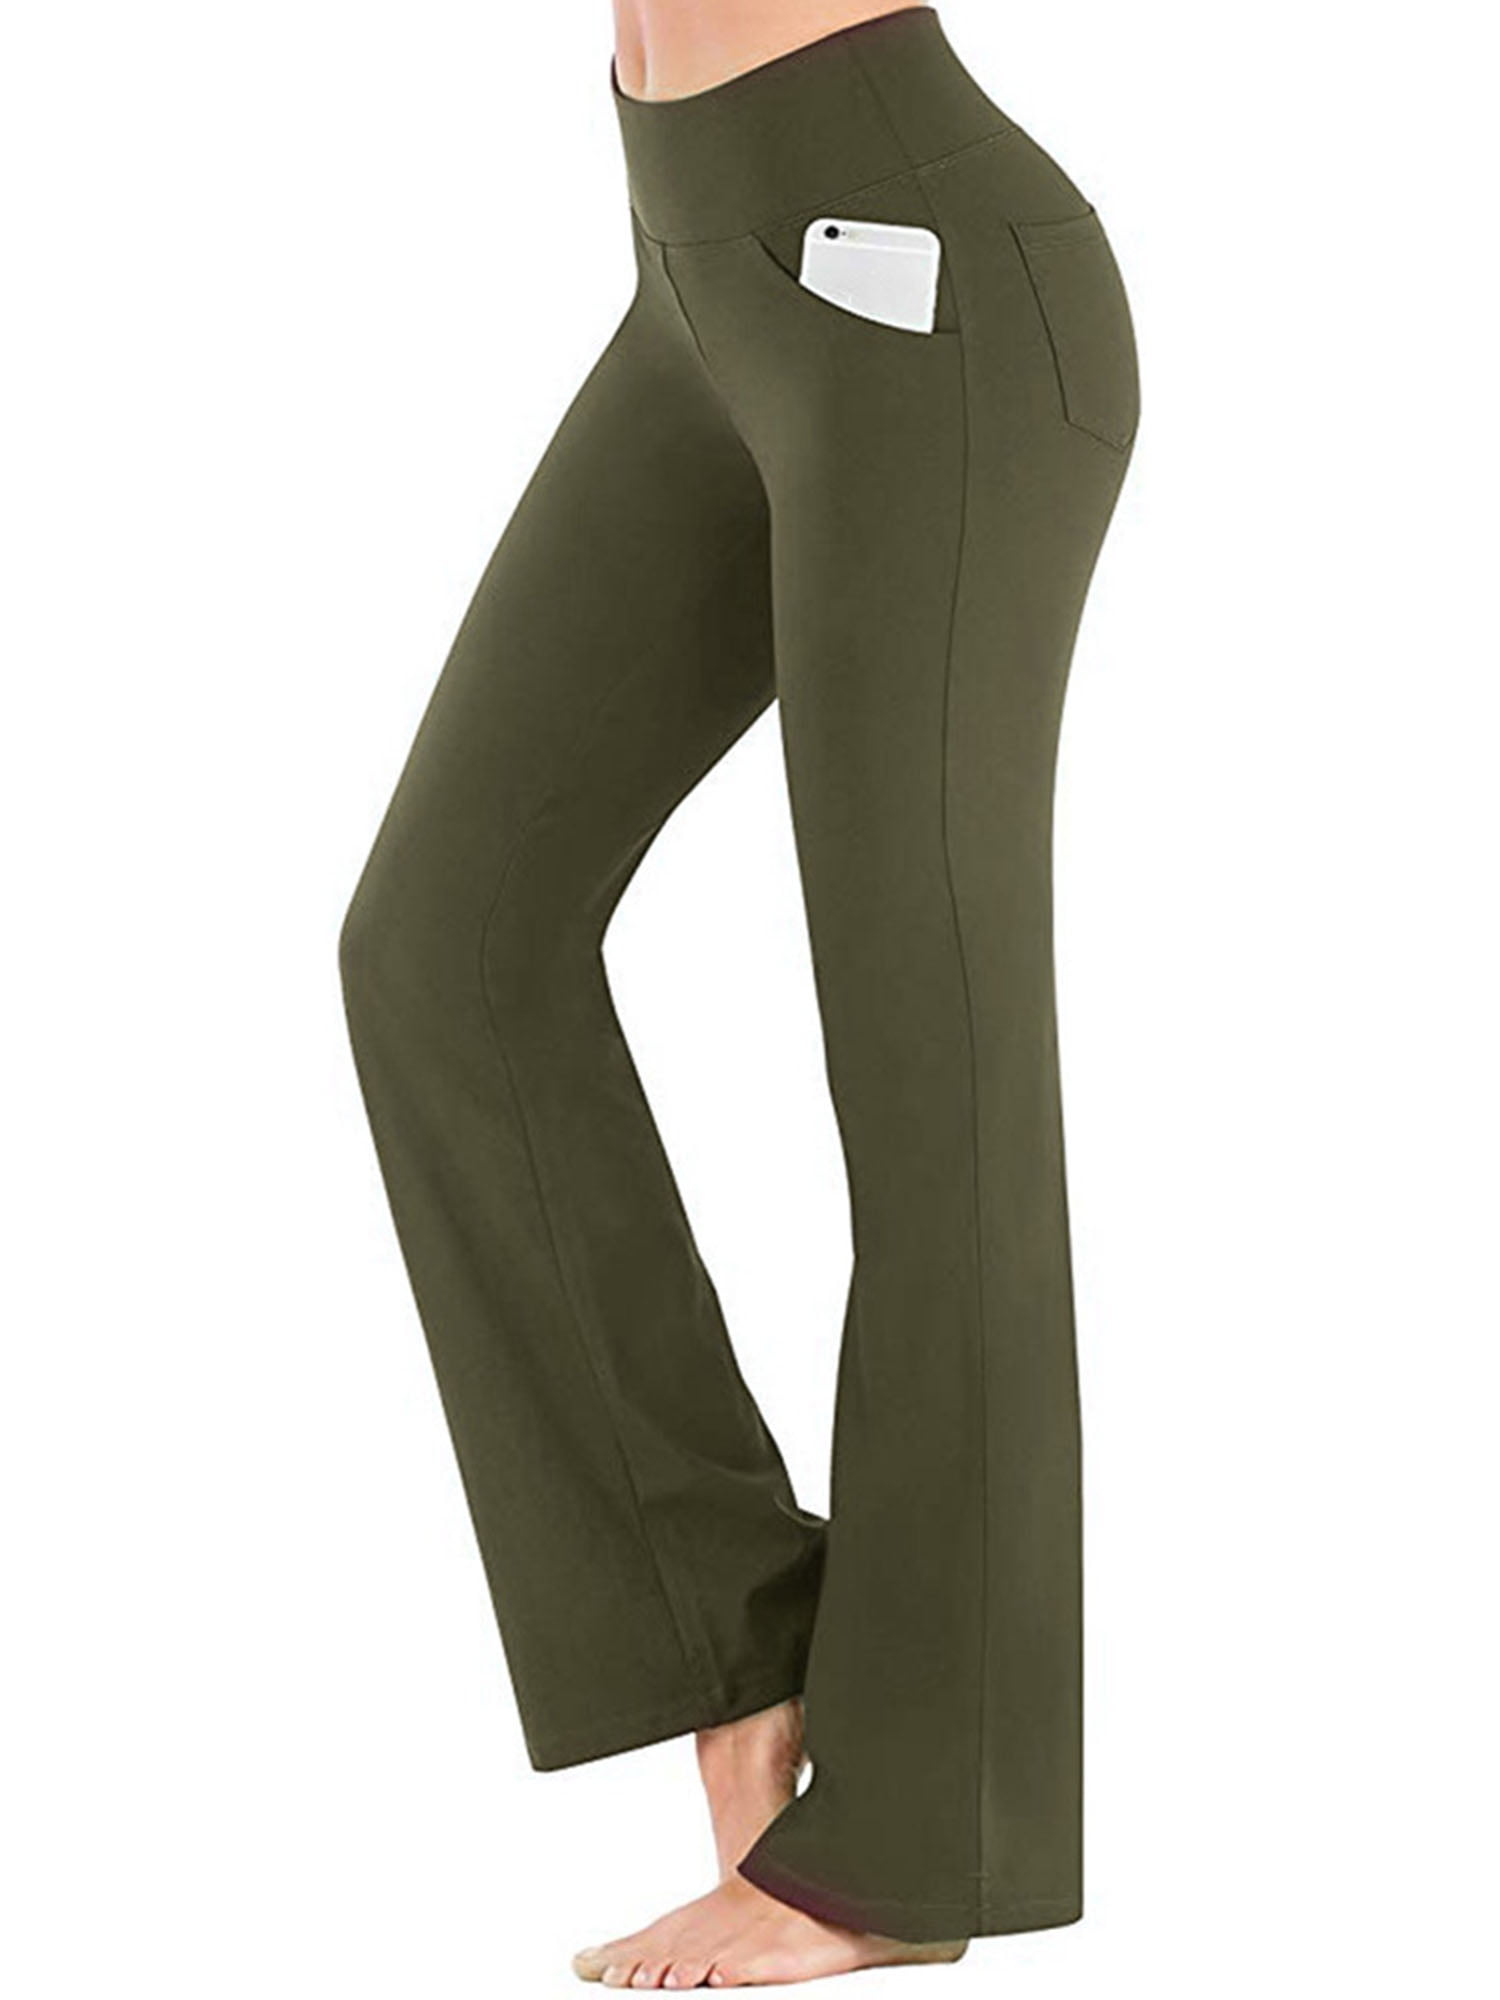 28/30/32/34 Inseam Womens Bootcut Yoga Pants Long Bootleg High-Waisted  Flare Pants